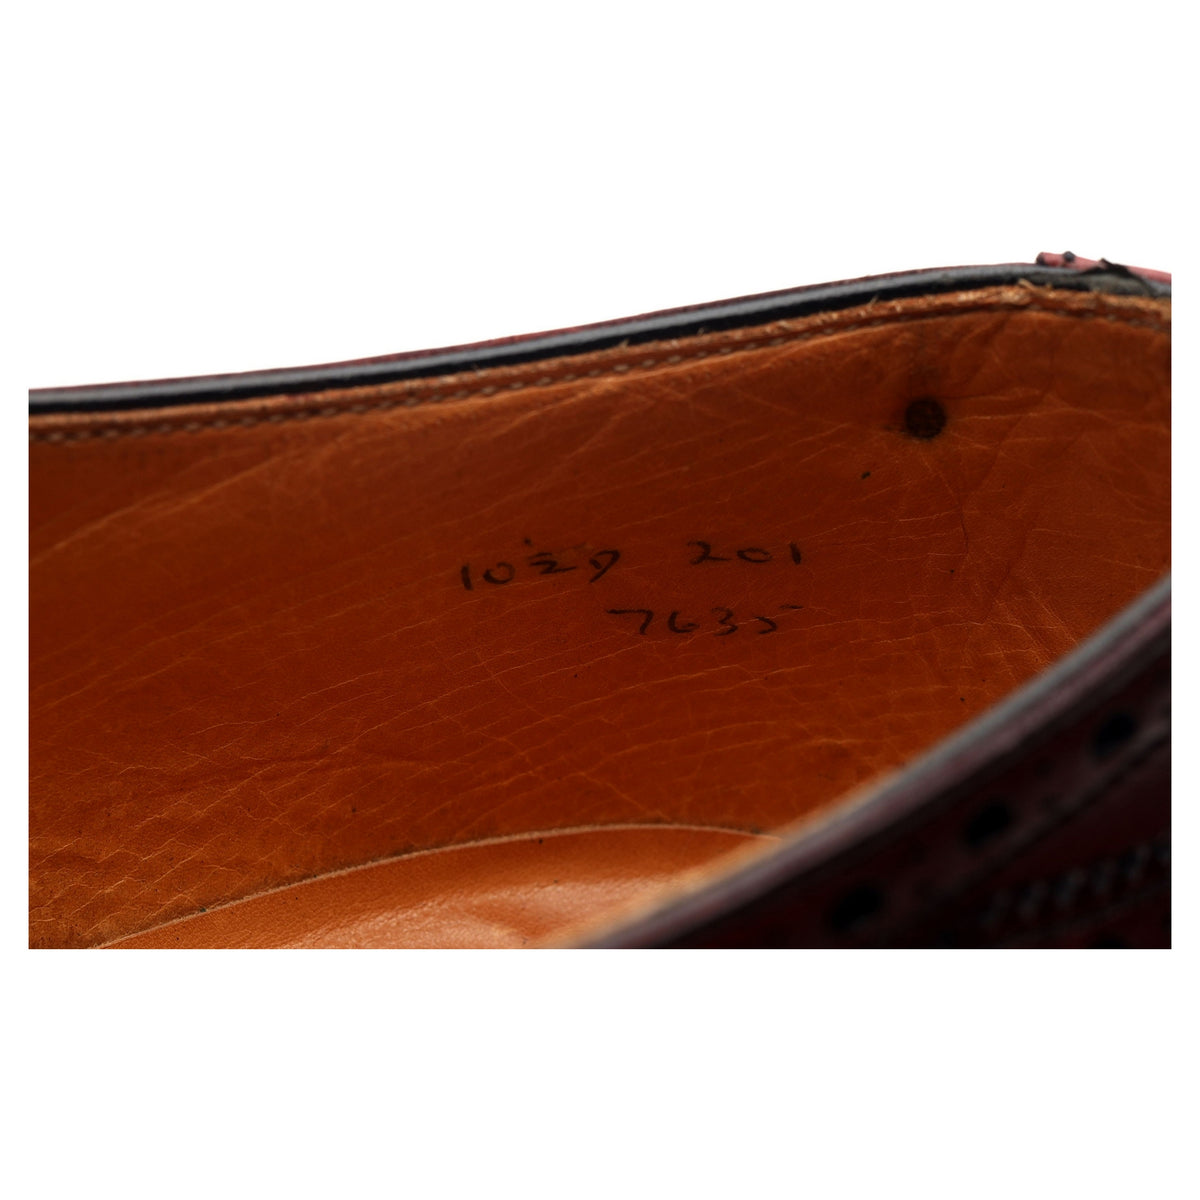 Alexander Julian Burgundy Leather Oxford Brogues UK 9.5 E US 10.5 D